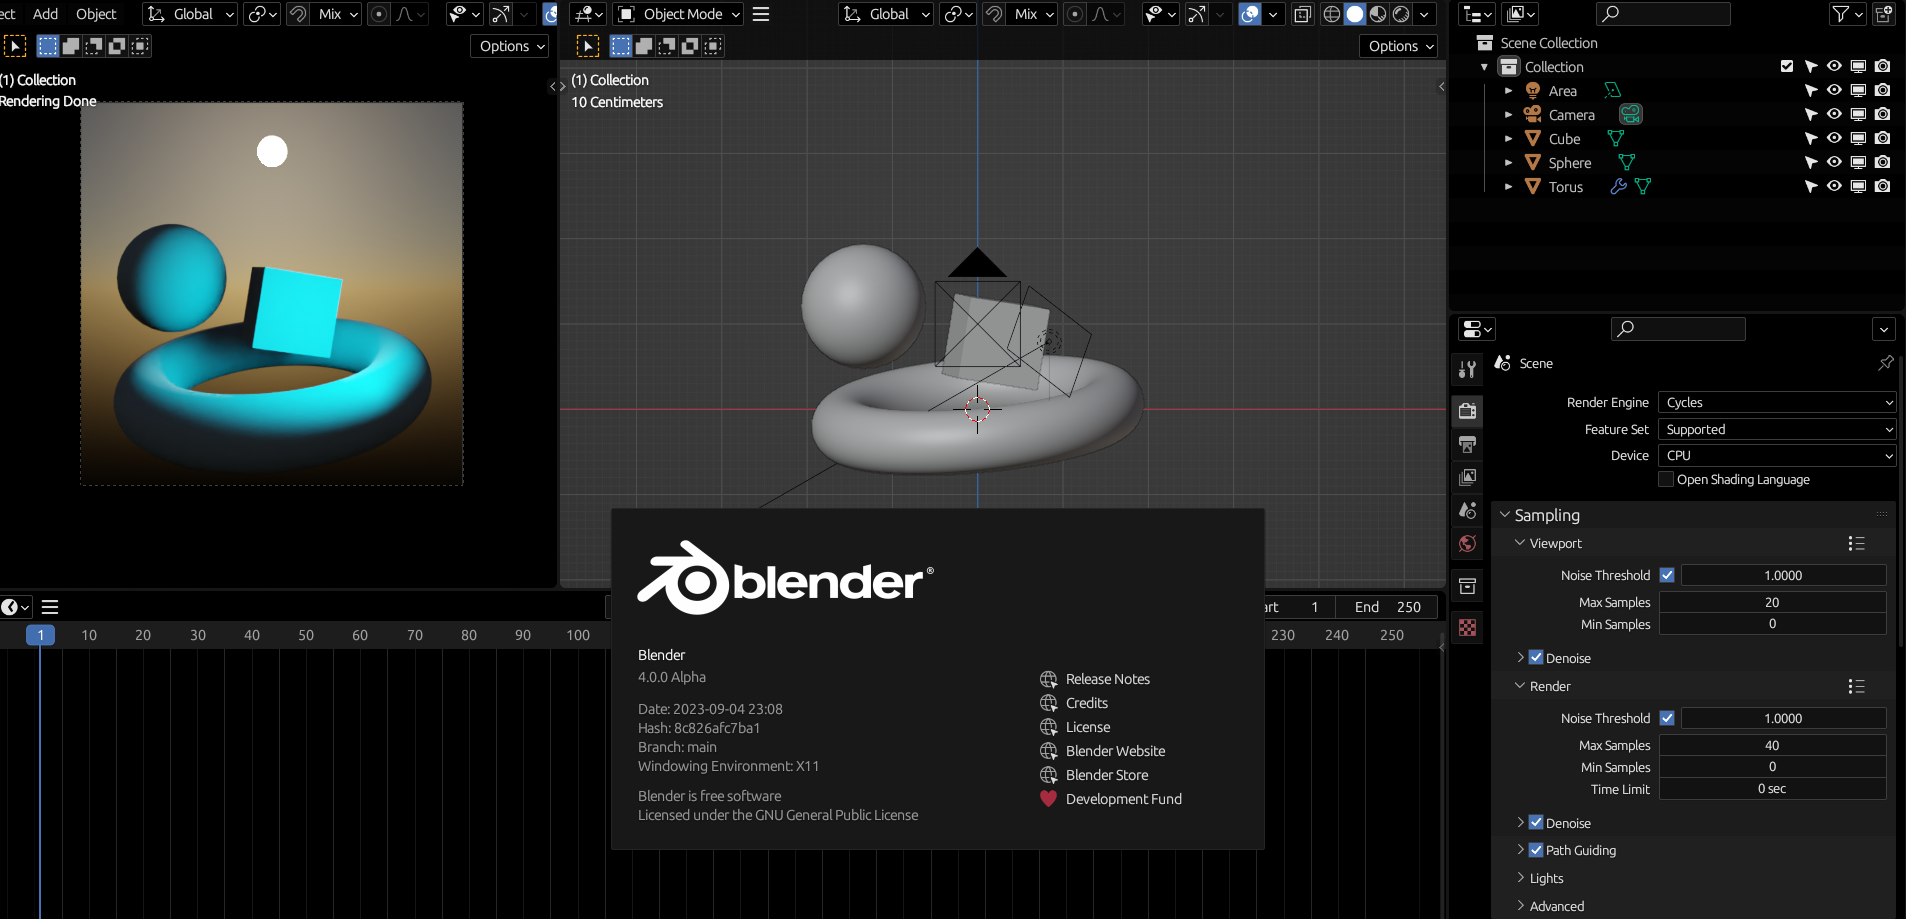 blender-4.0.0-alpha+main.8c826afc7ba1-linux.x86_64-release